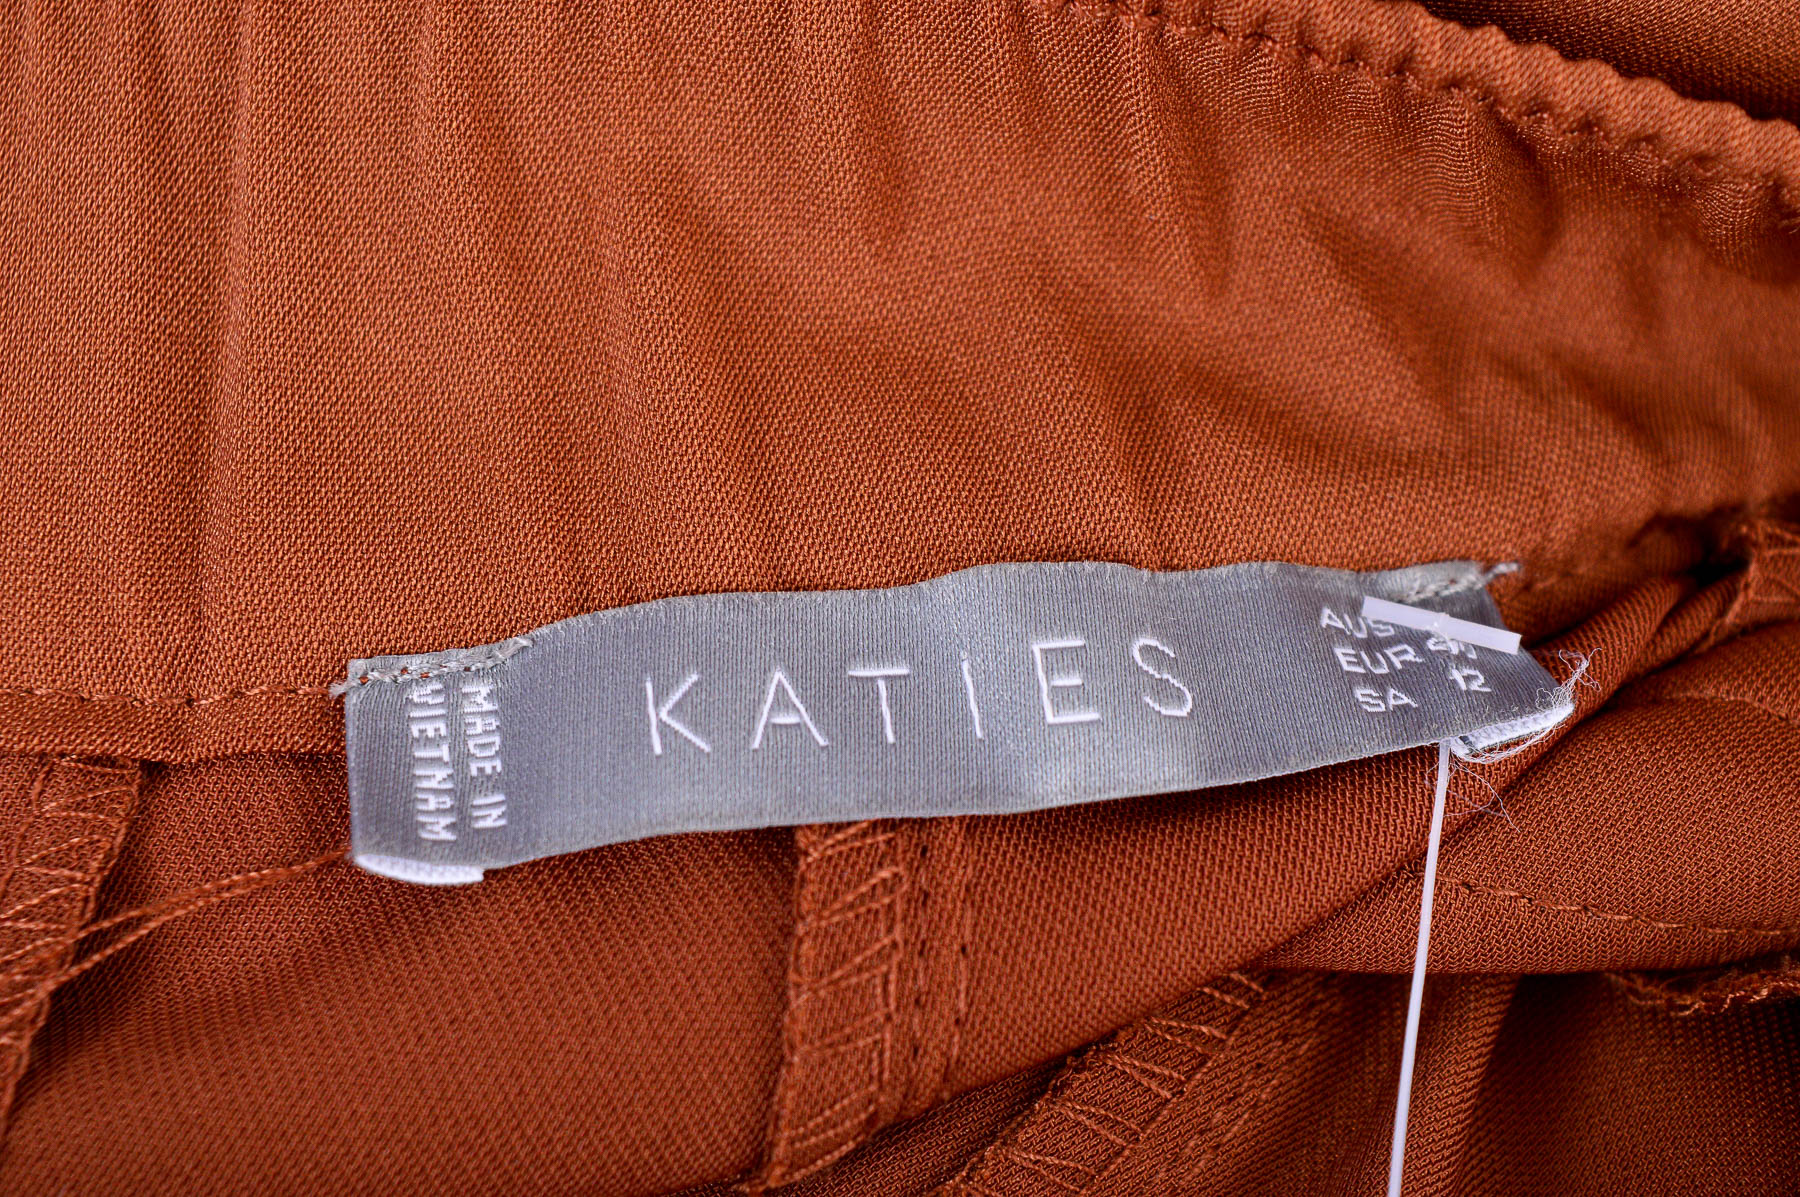 Women's trousers - KATIES - 2